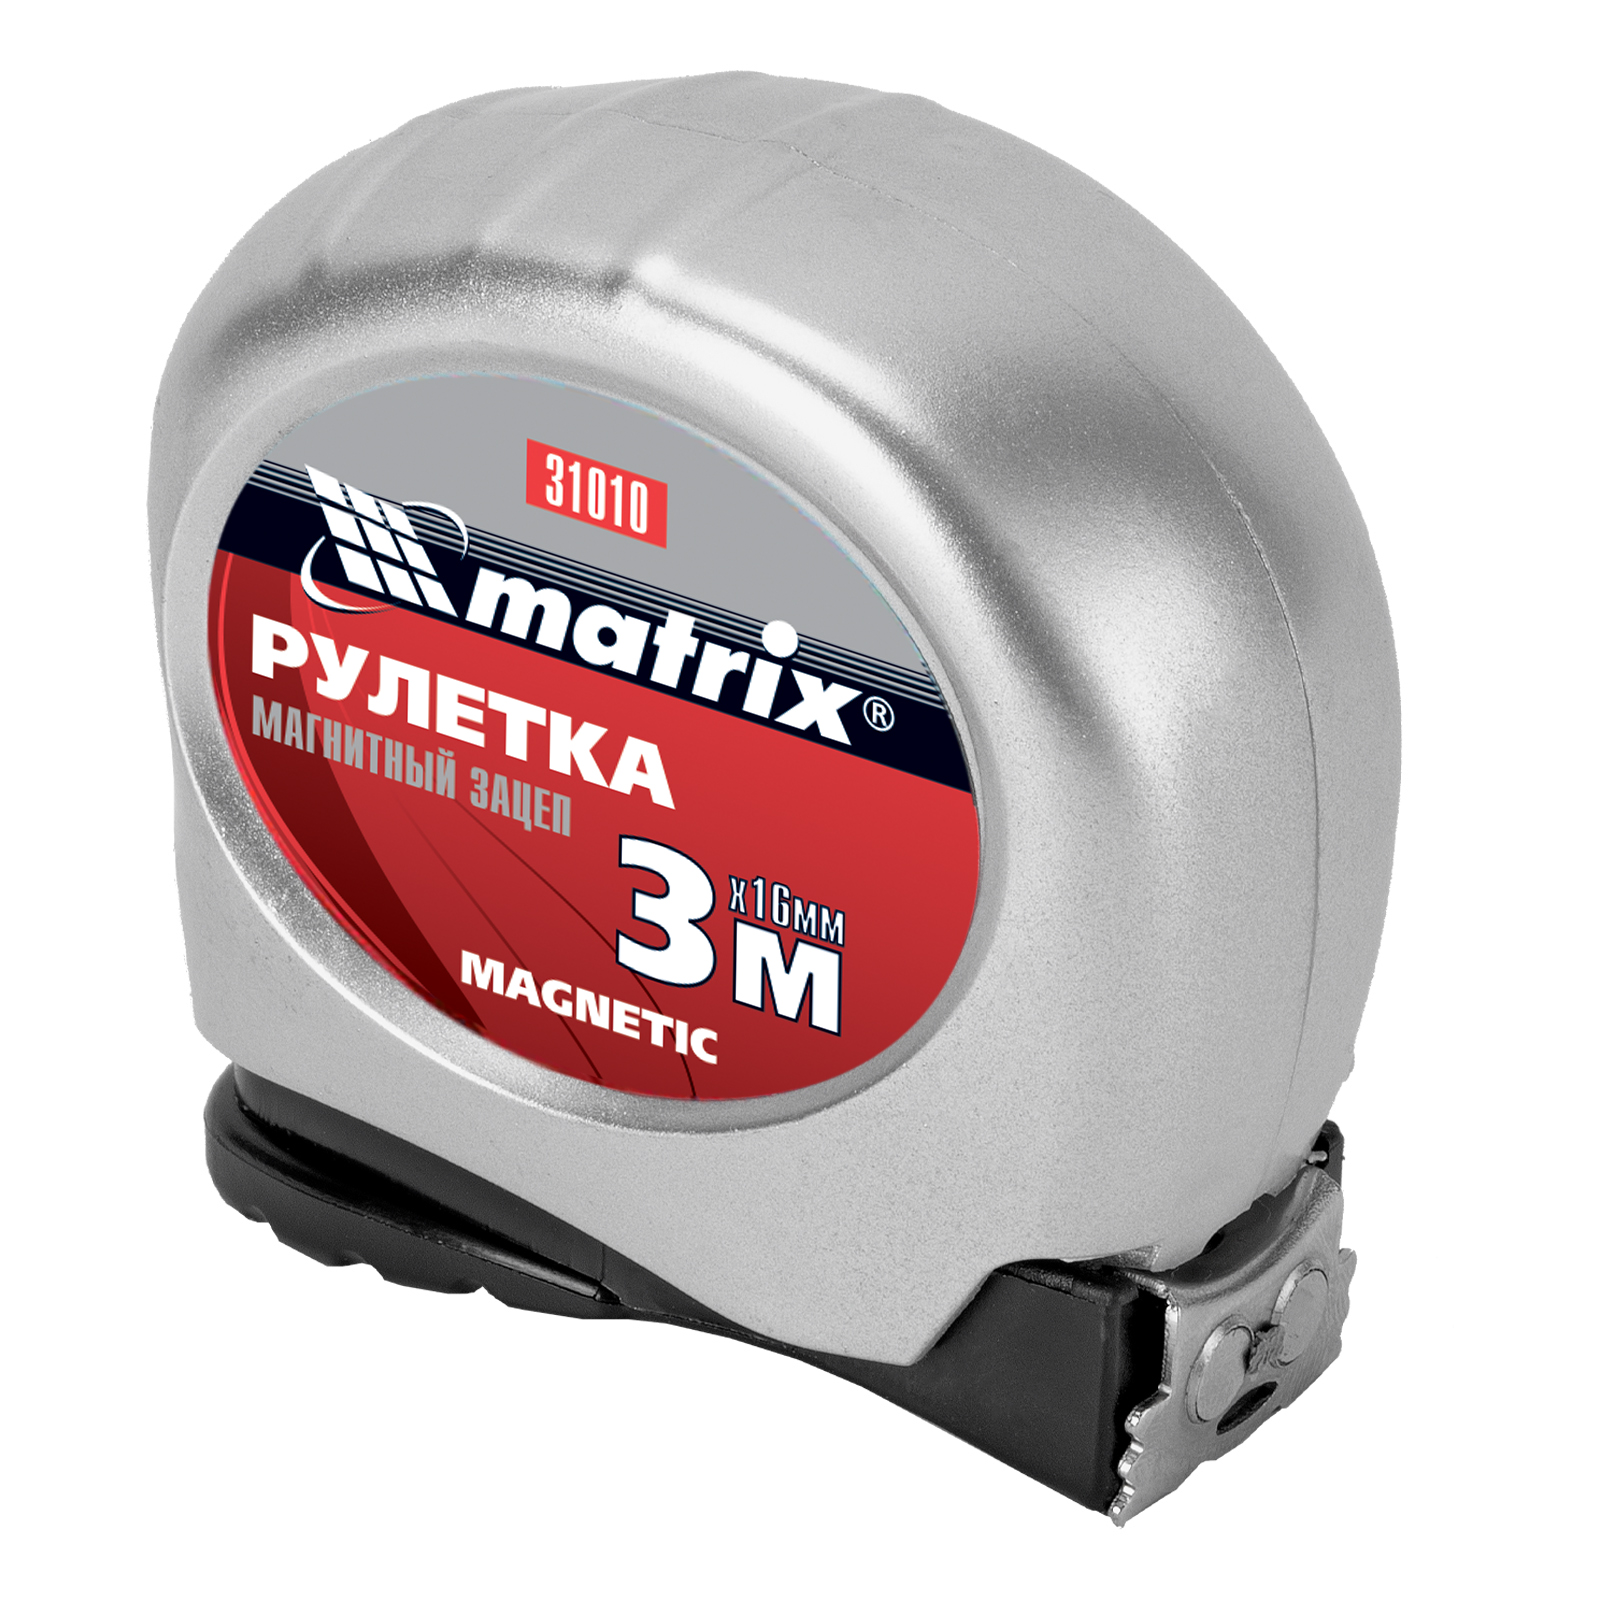 Рулетка MATRIX Magnetic 3мх16мм 31010 рулетка matrix magnetic 5мх19мм 31011